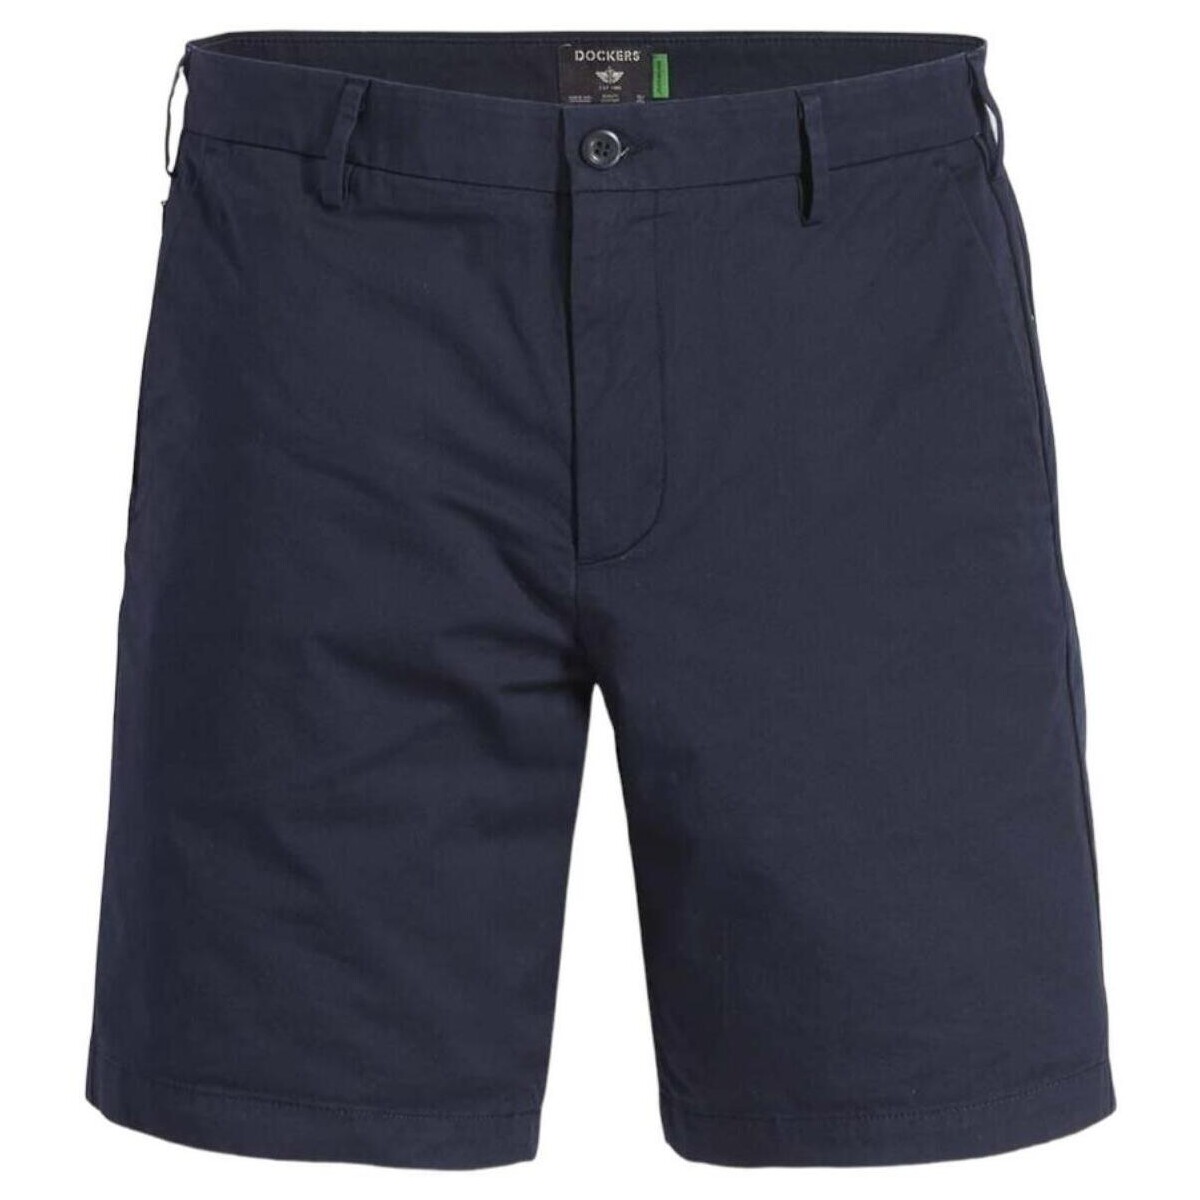 textil Hombre Shorts / Bermudas Dockers 85862 0073 Azul